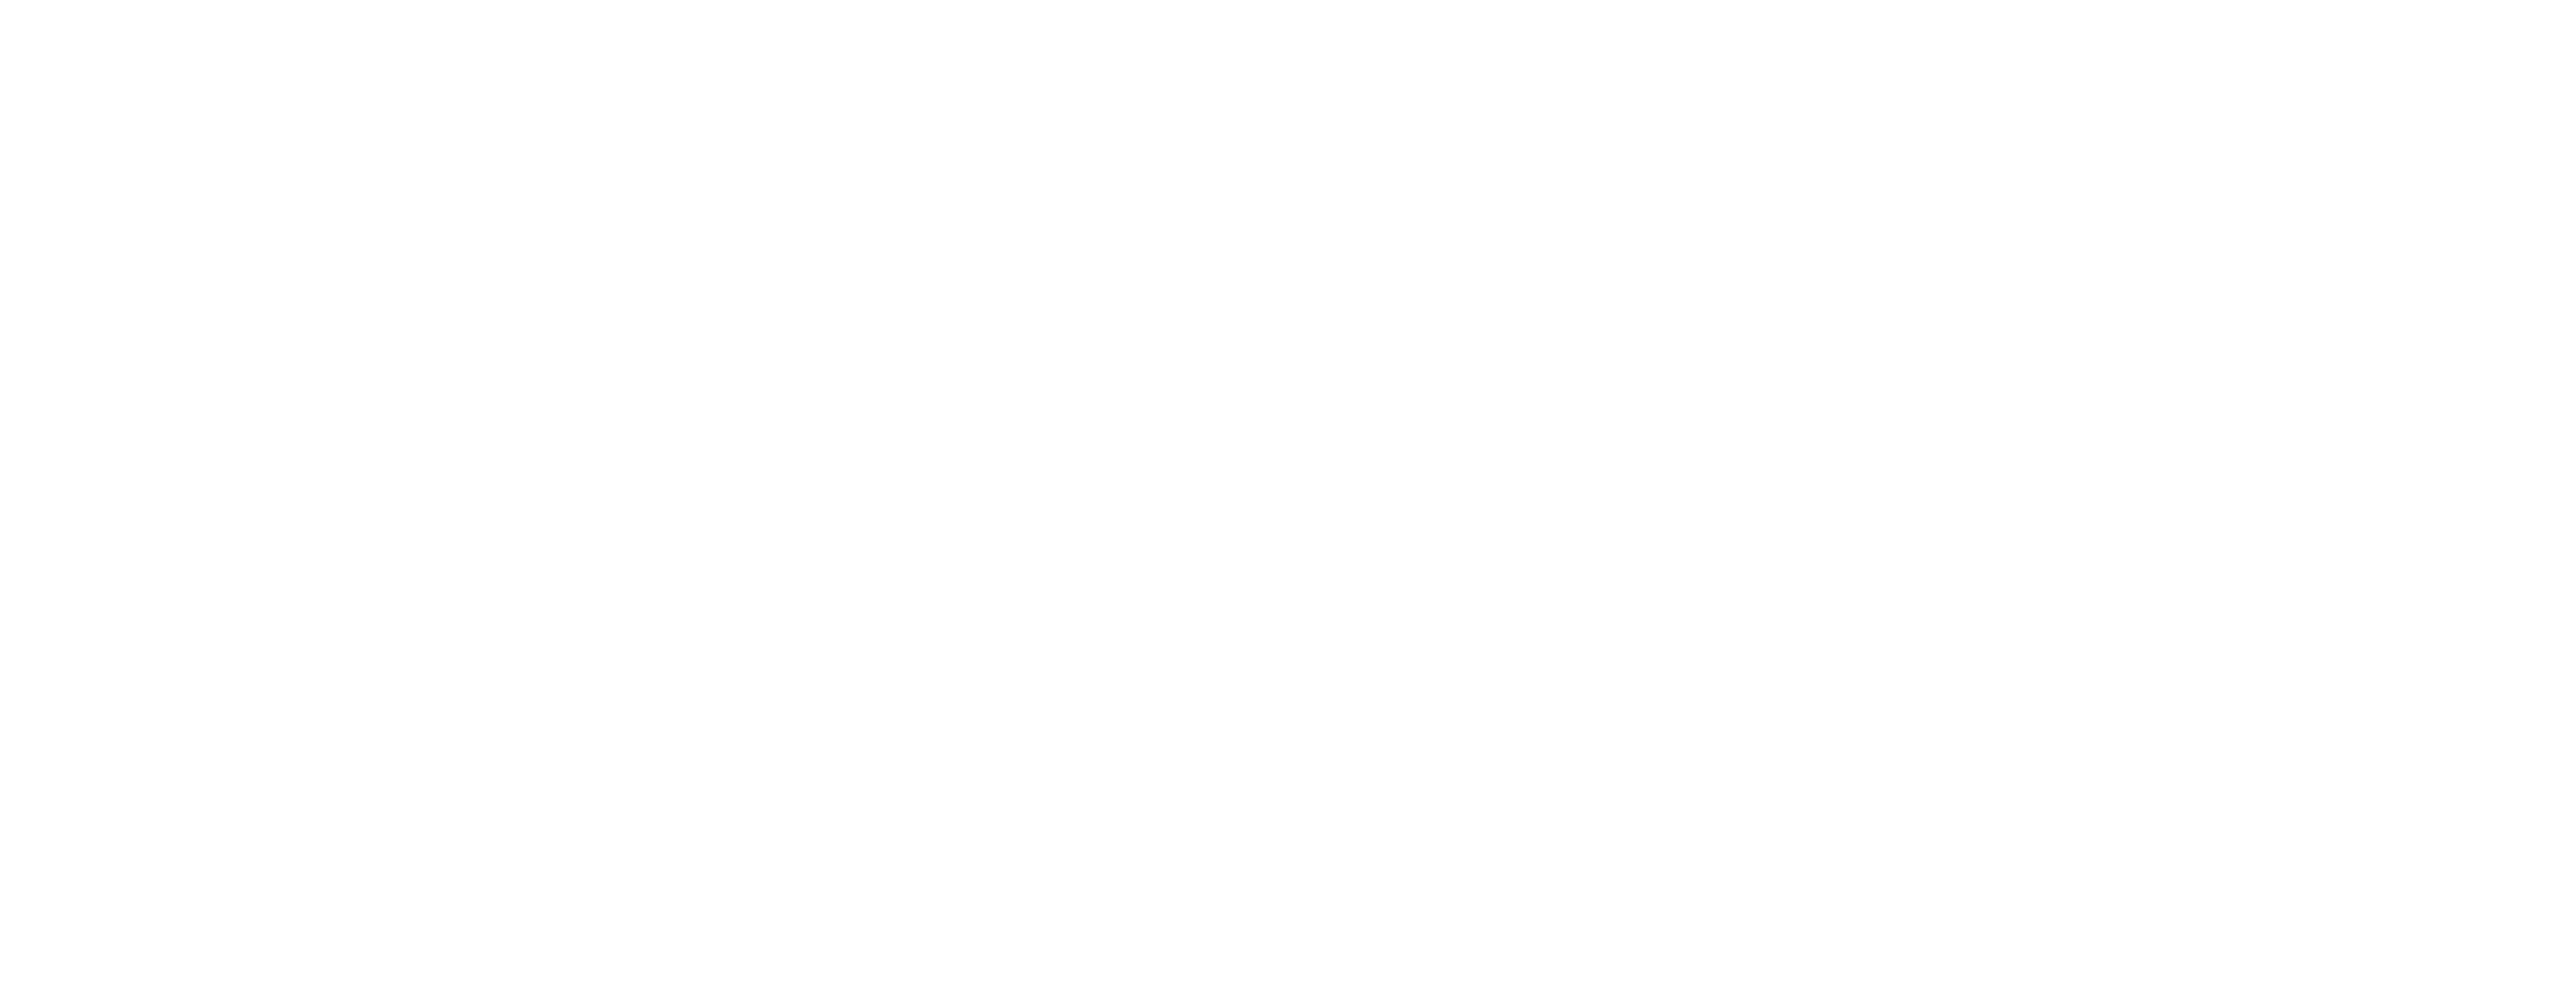 Bandish Bandits logo